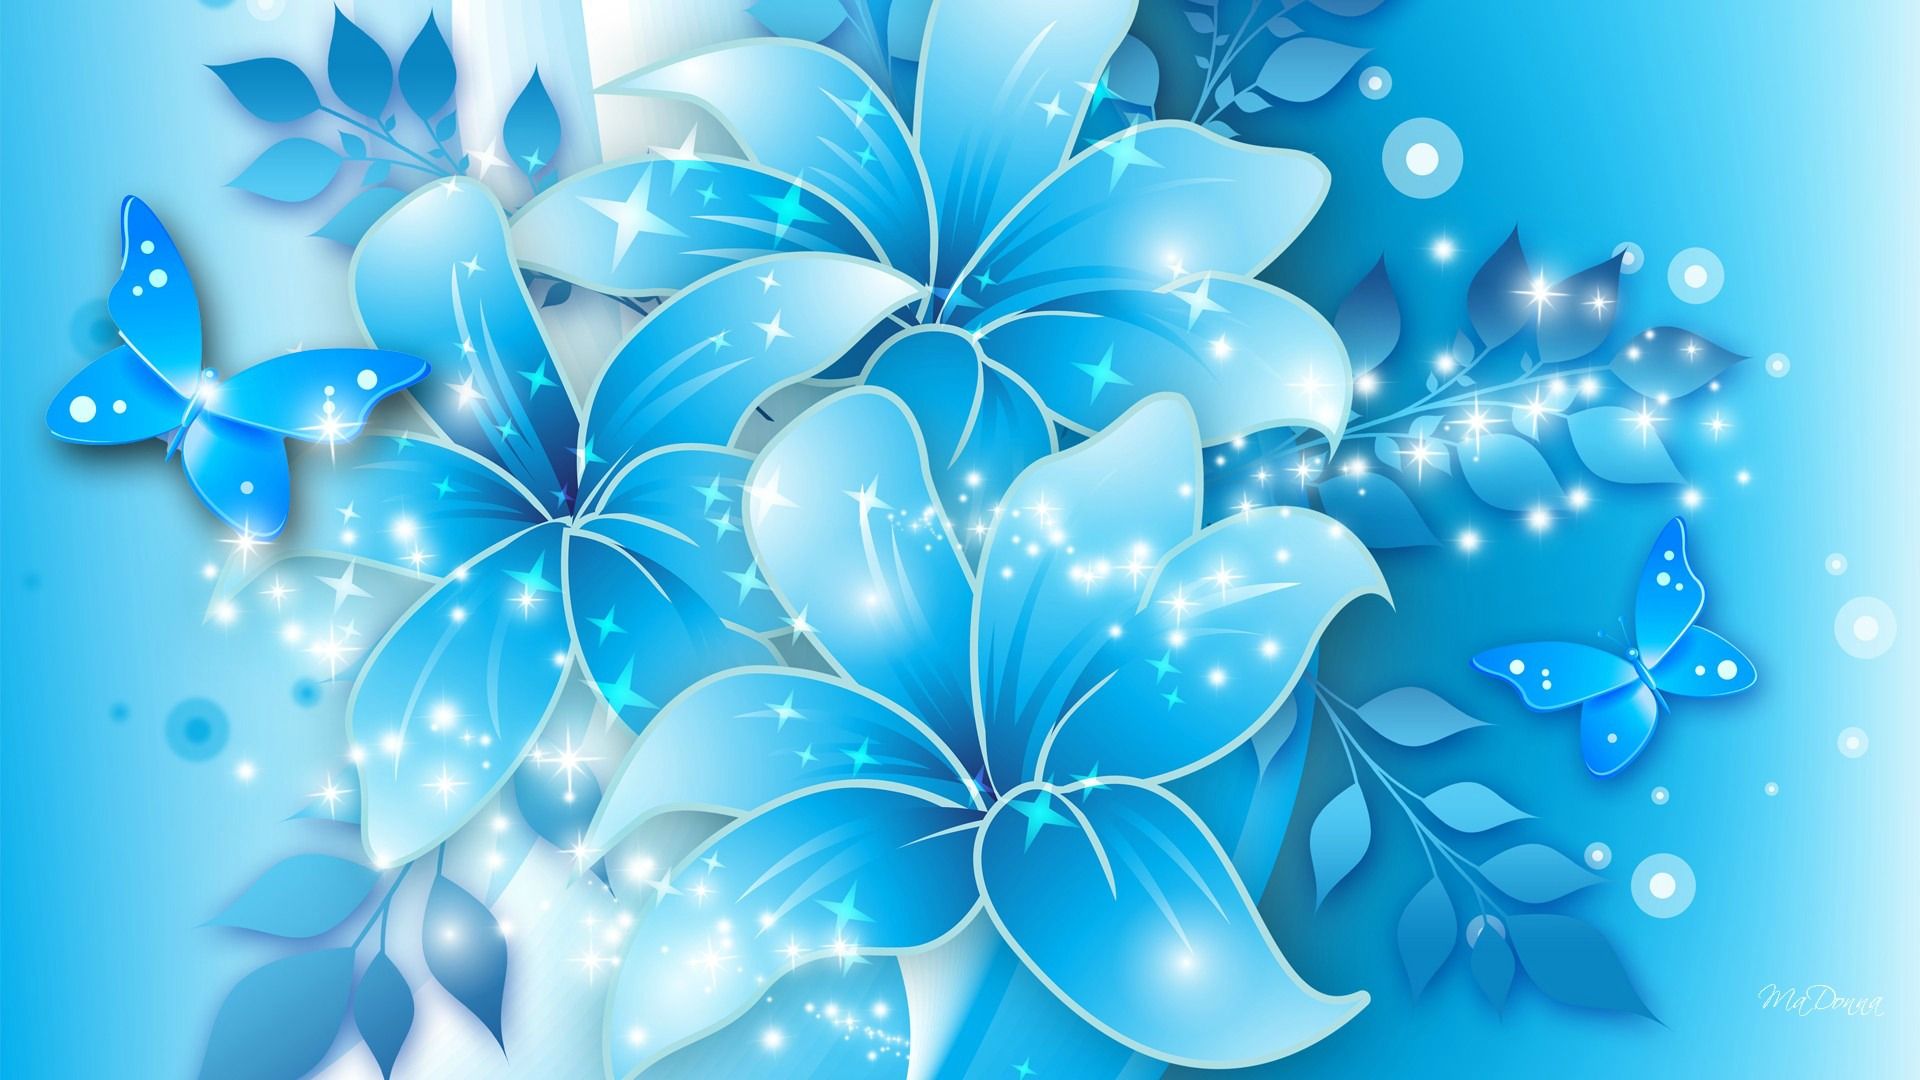 Light Blue Flowers HD | Flowers | Pinterest | Flowers and Flower art